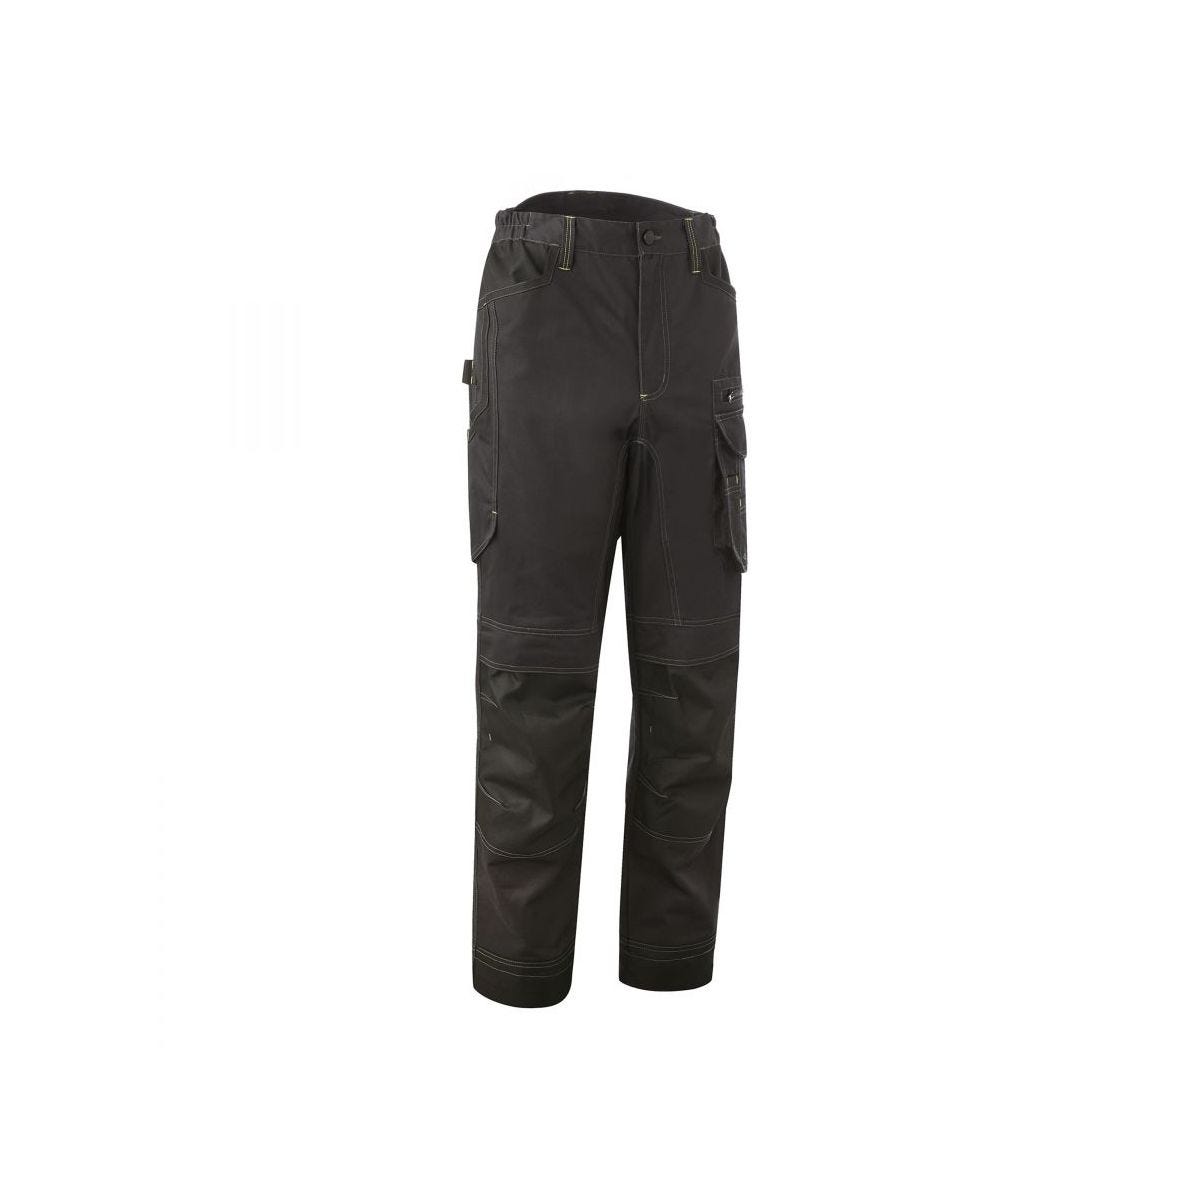 Pantalon BARVA Anthracite-Lime - Coverguard - Taille S 0